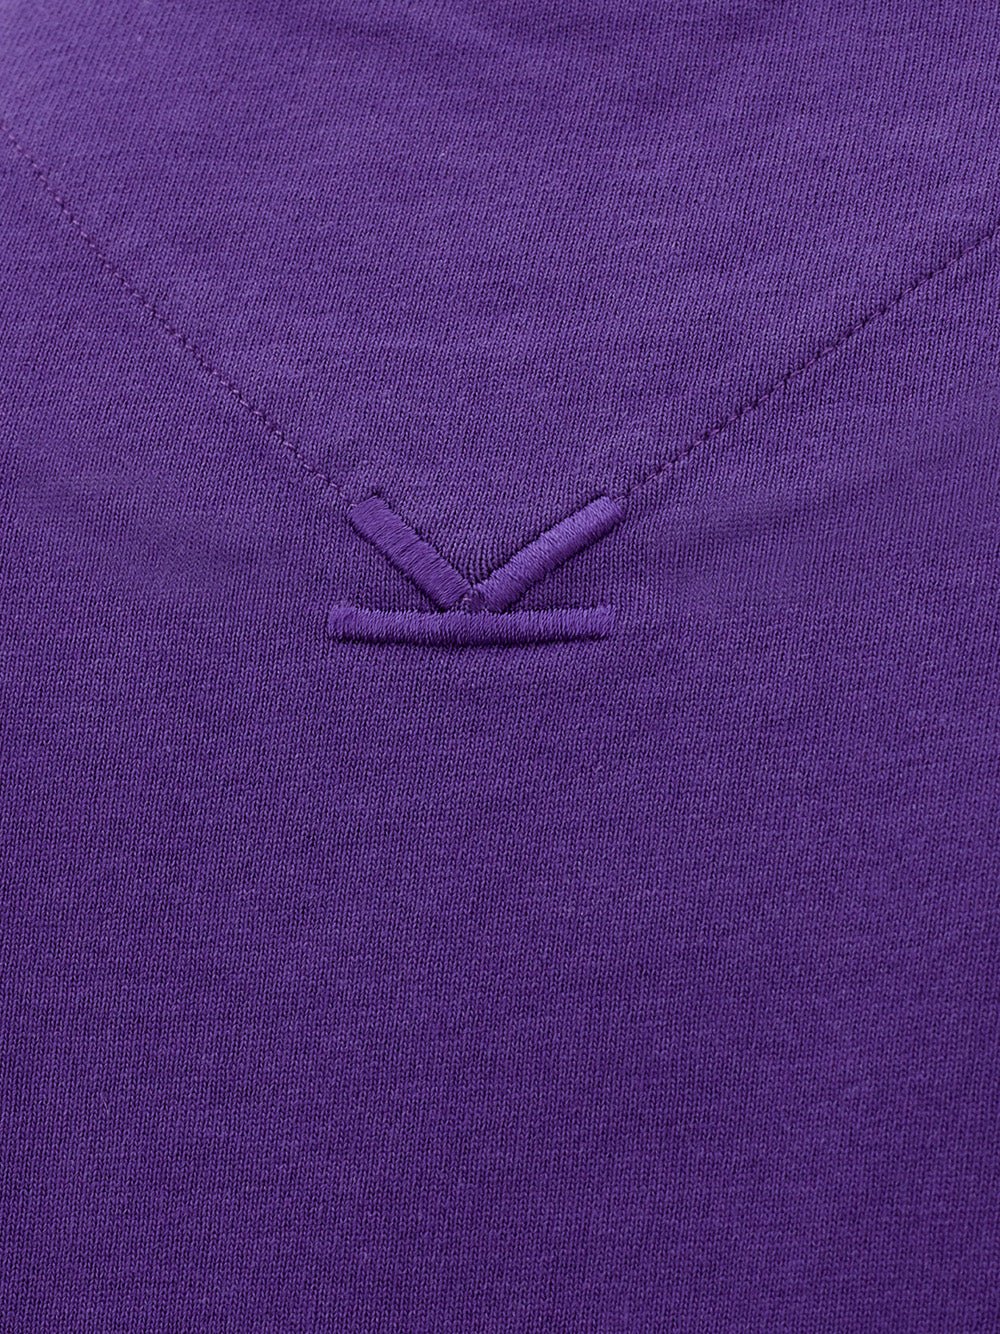 Fashionsarah.com Fashionsarah.com Kenzo Purple Cotton T-Shirt with Front Print